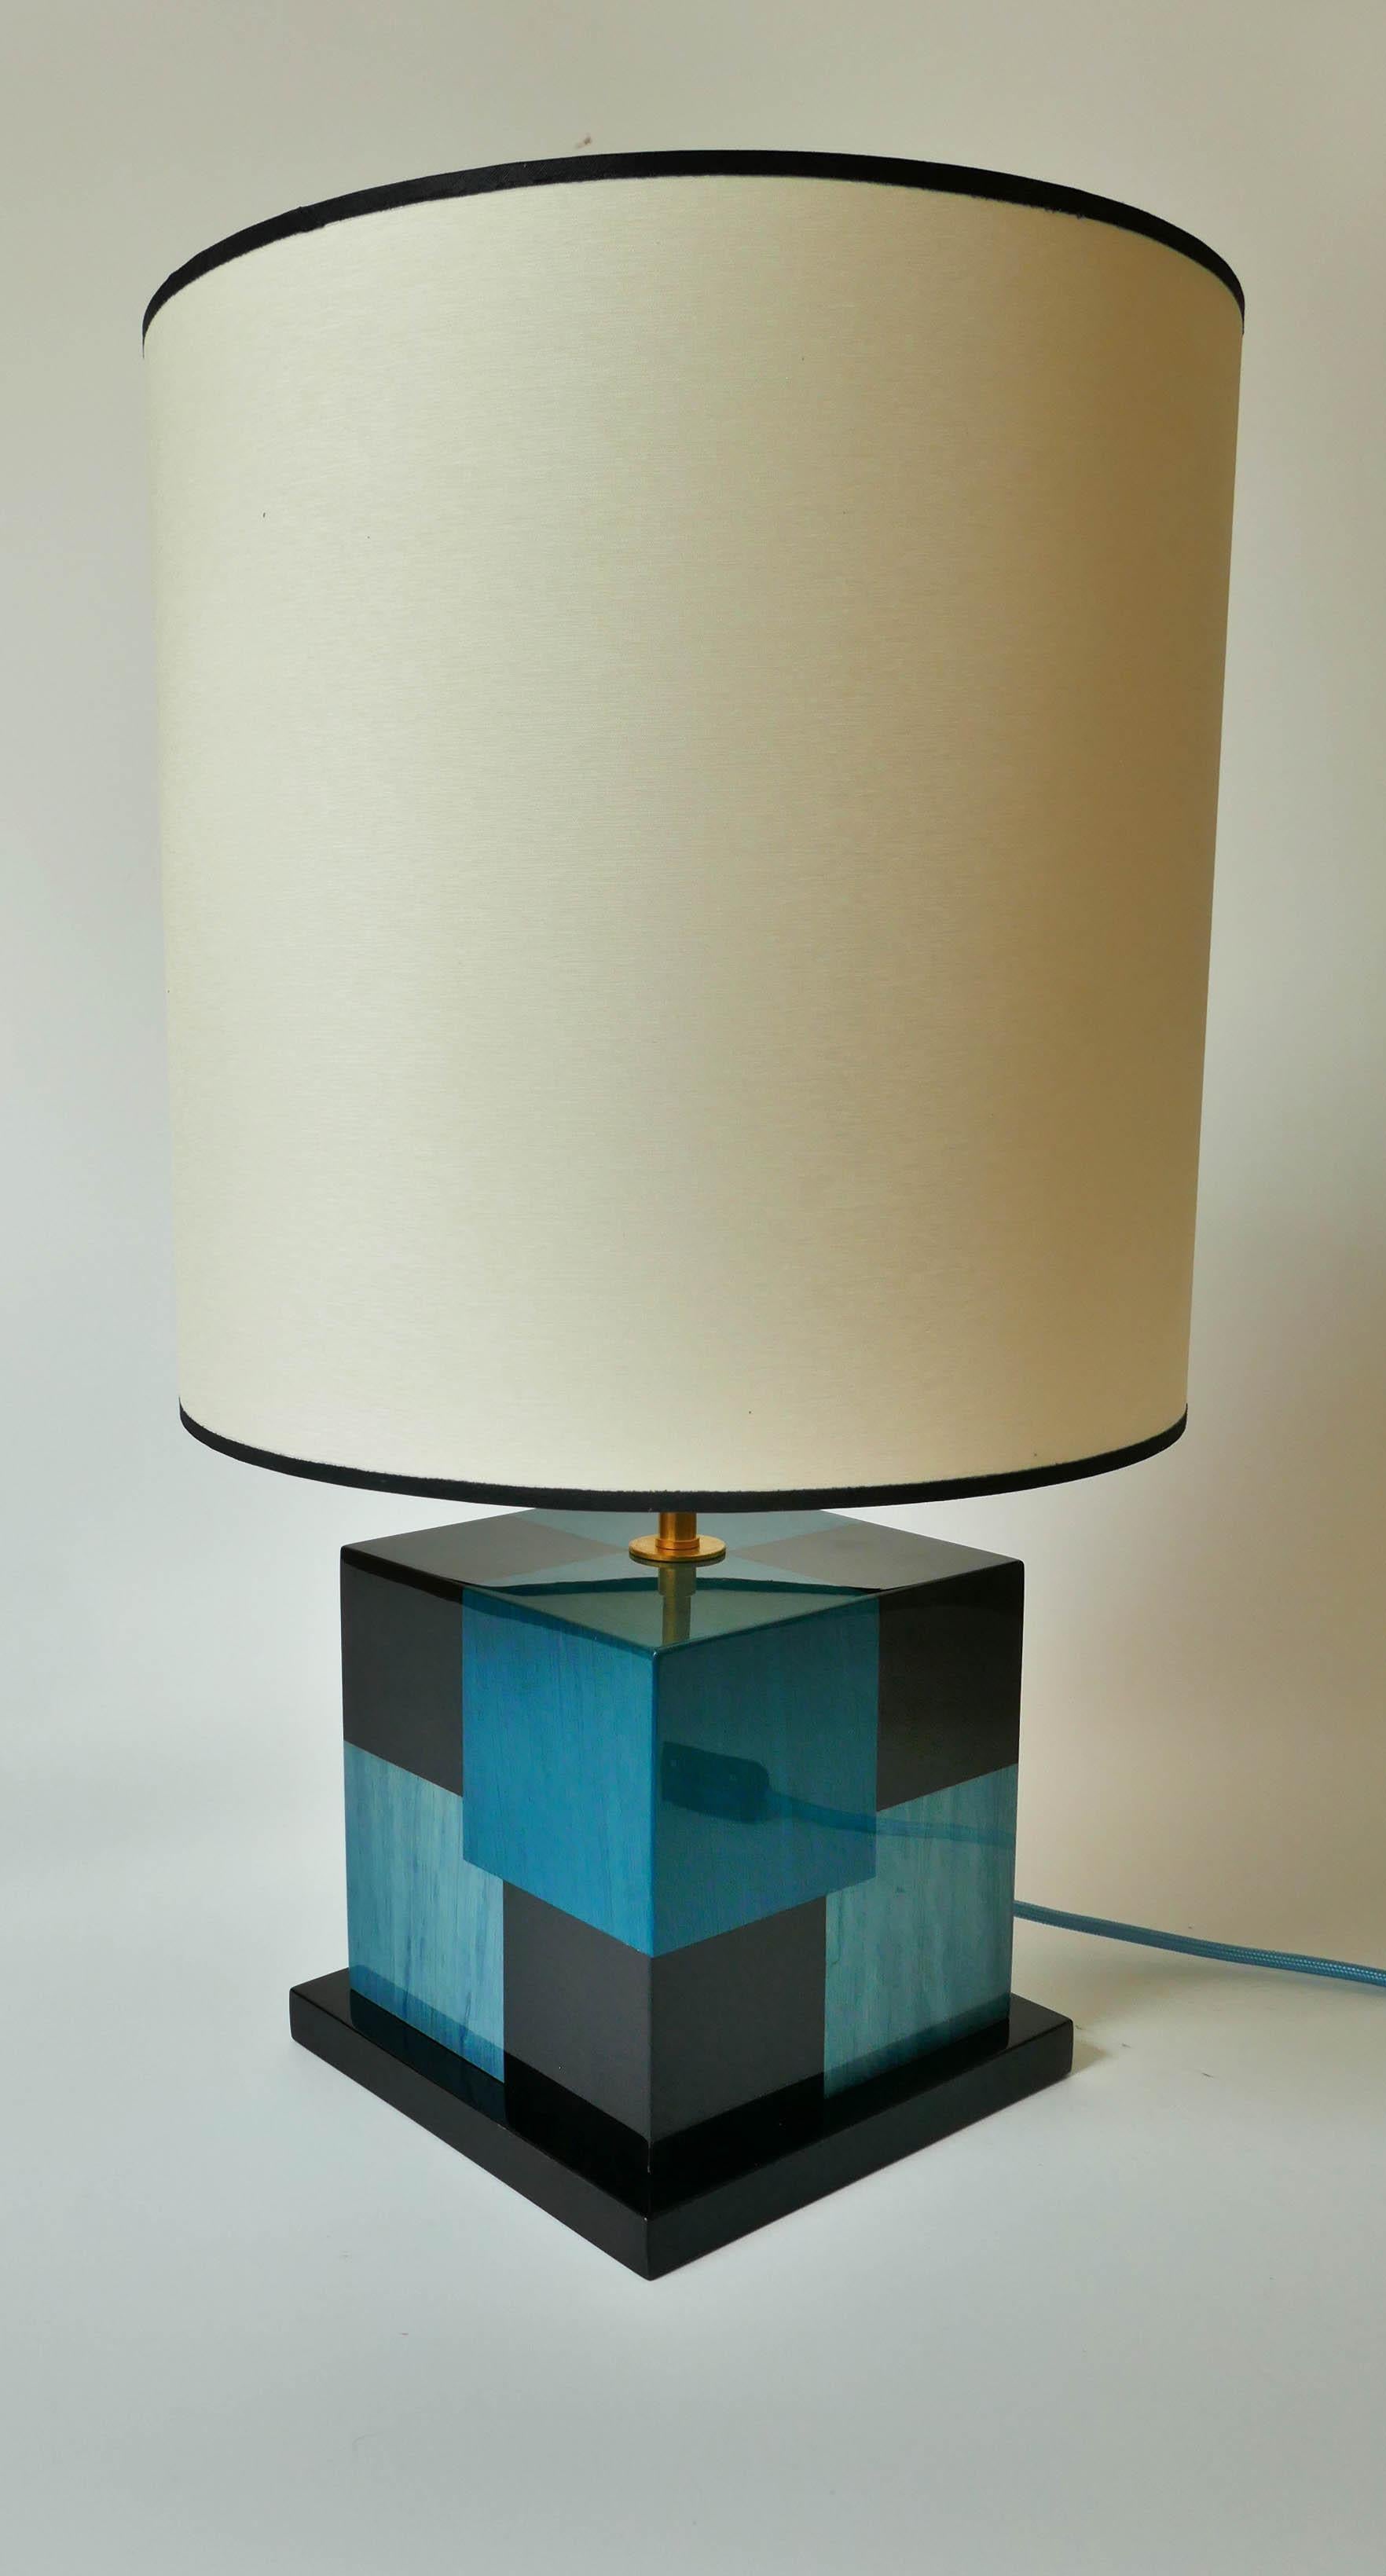 Varnished Table Lamp